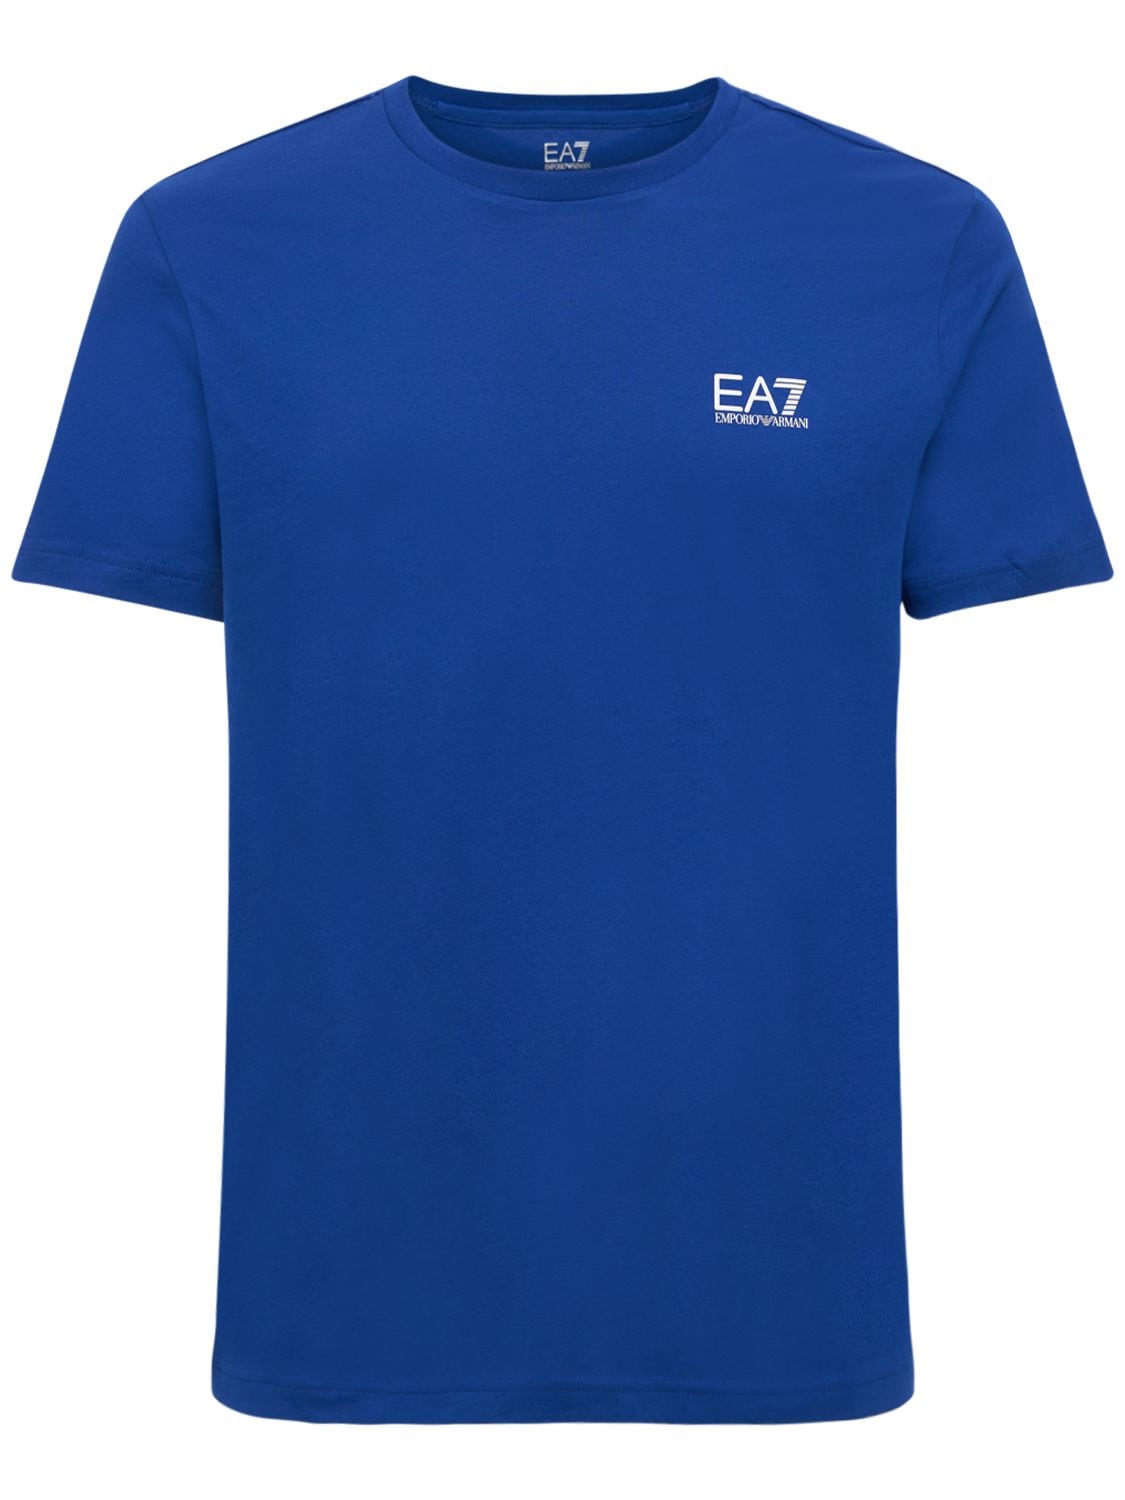 T-shirt En Jersey De Coton "7 Lines" - EA7 EMPORIO ARMANI - Modalova